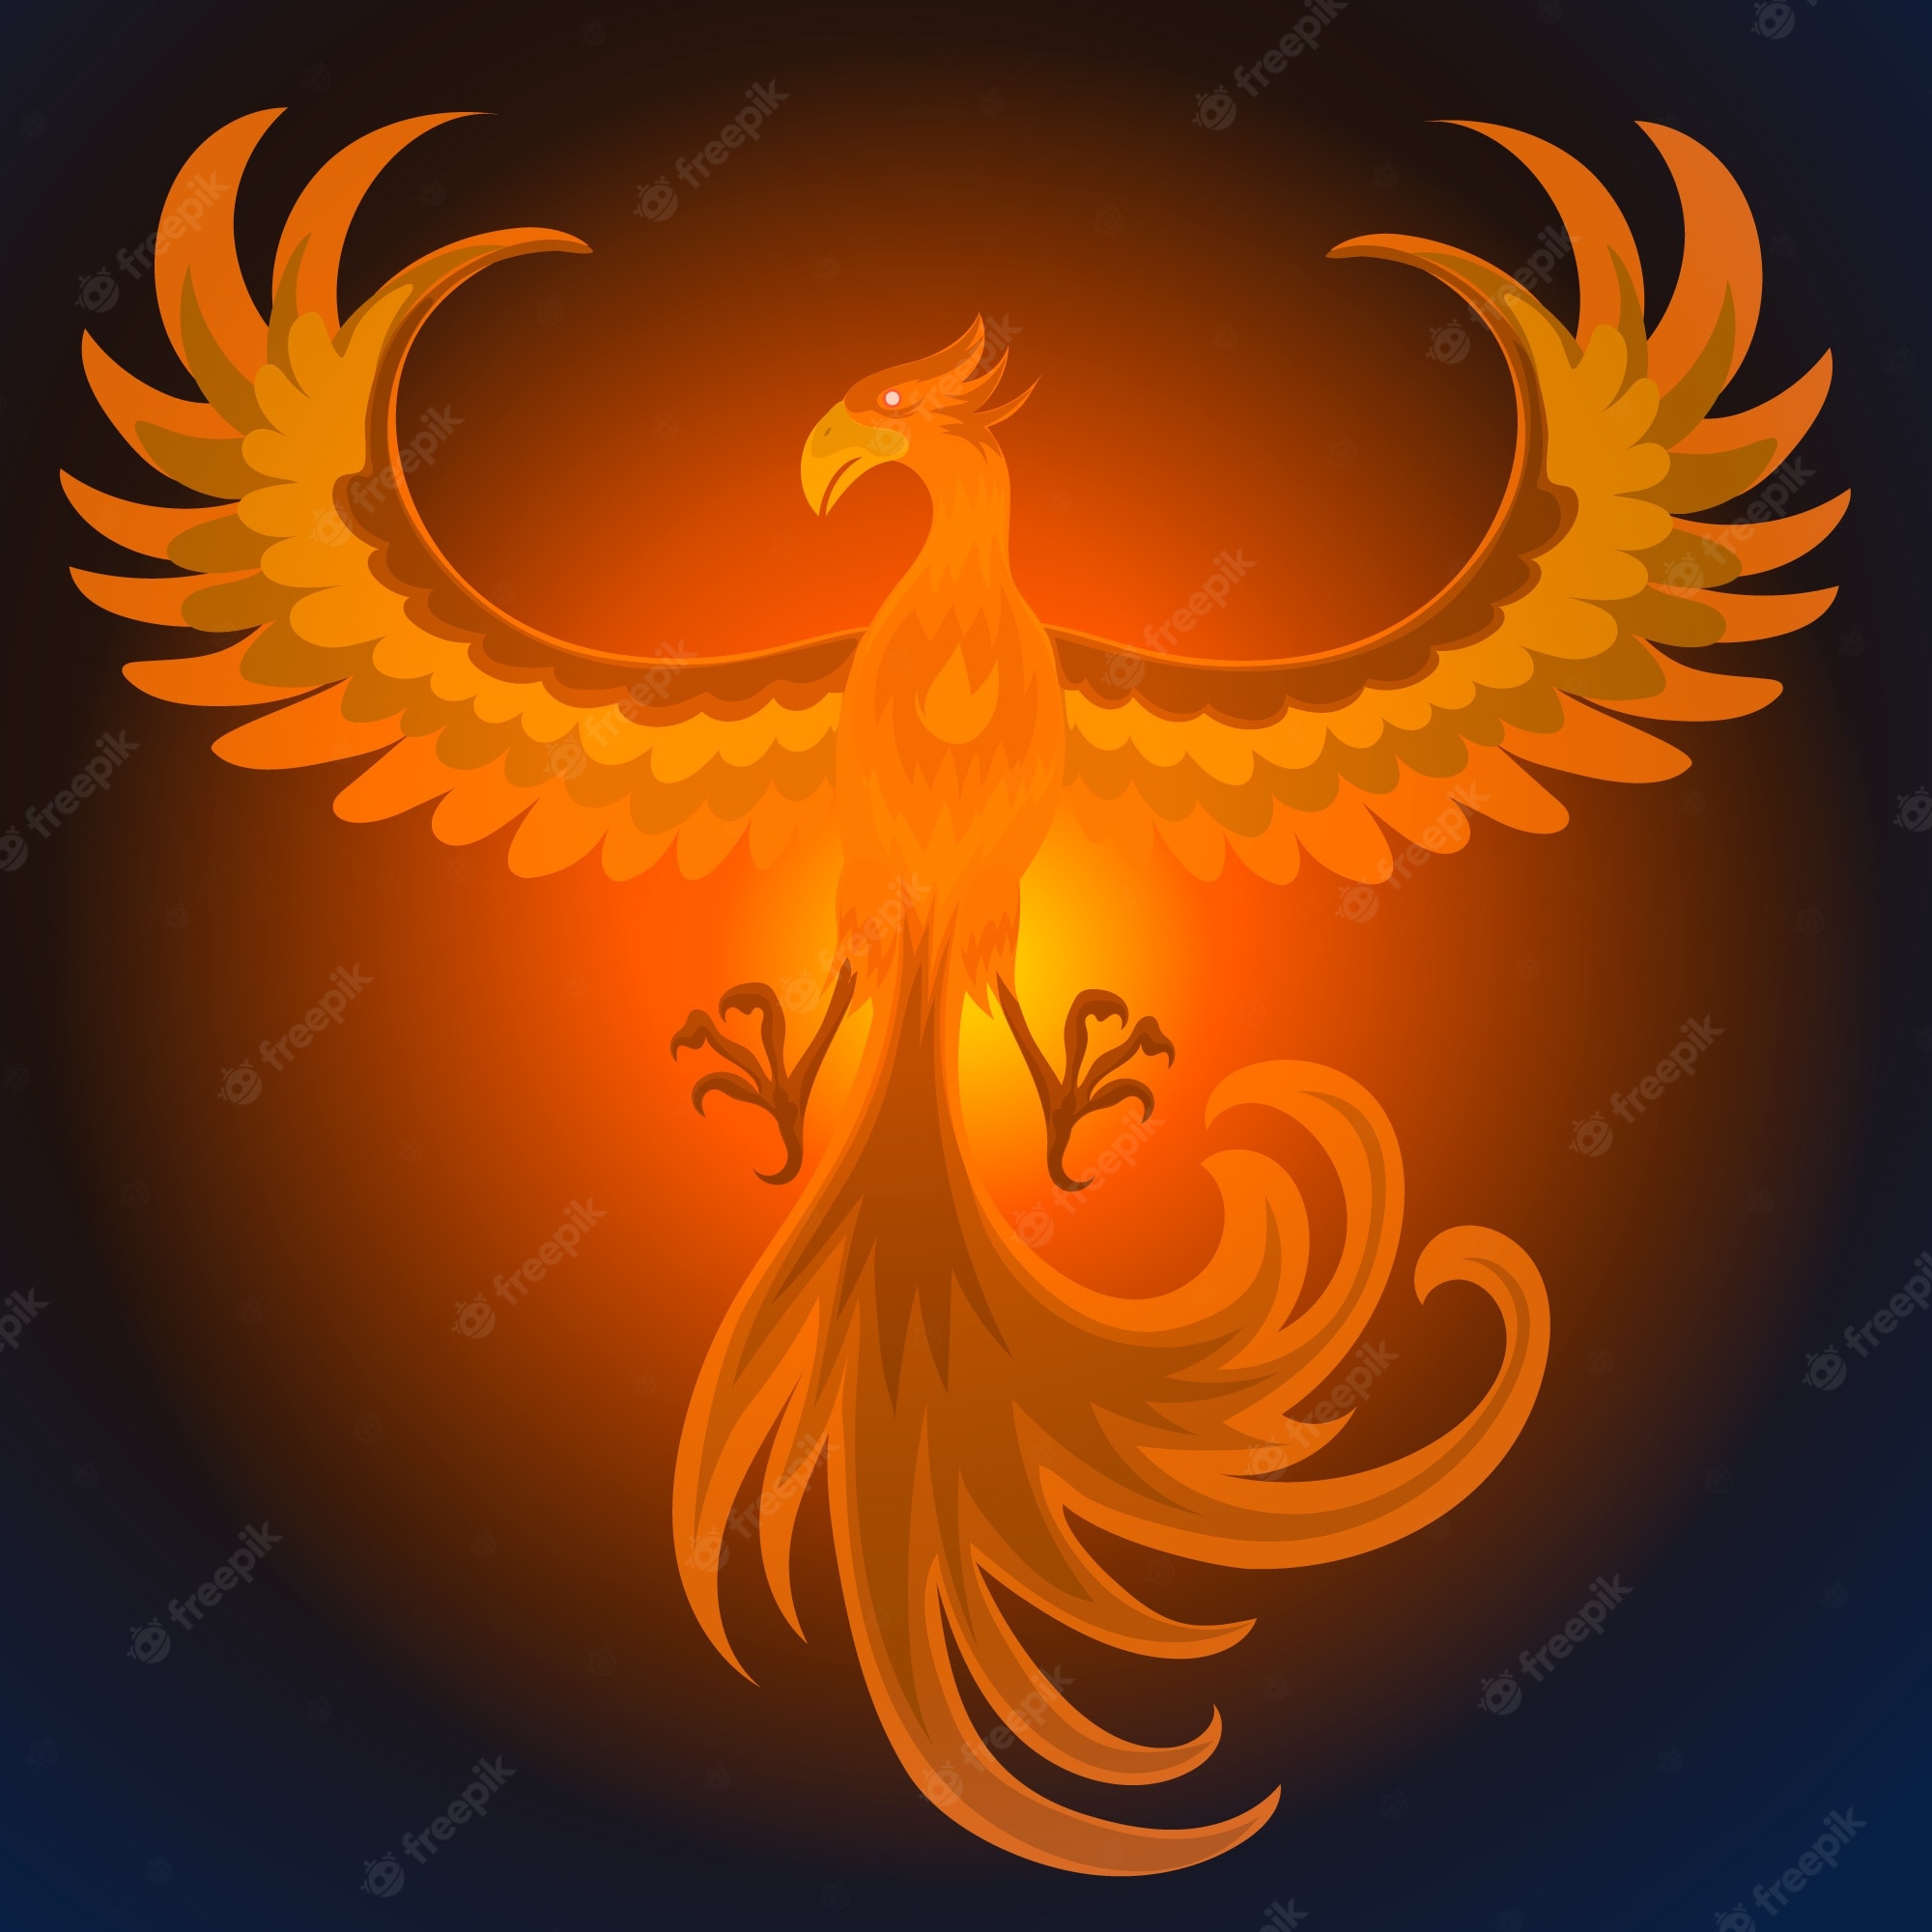 Phoenix Rising Image